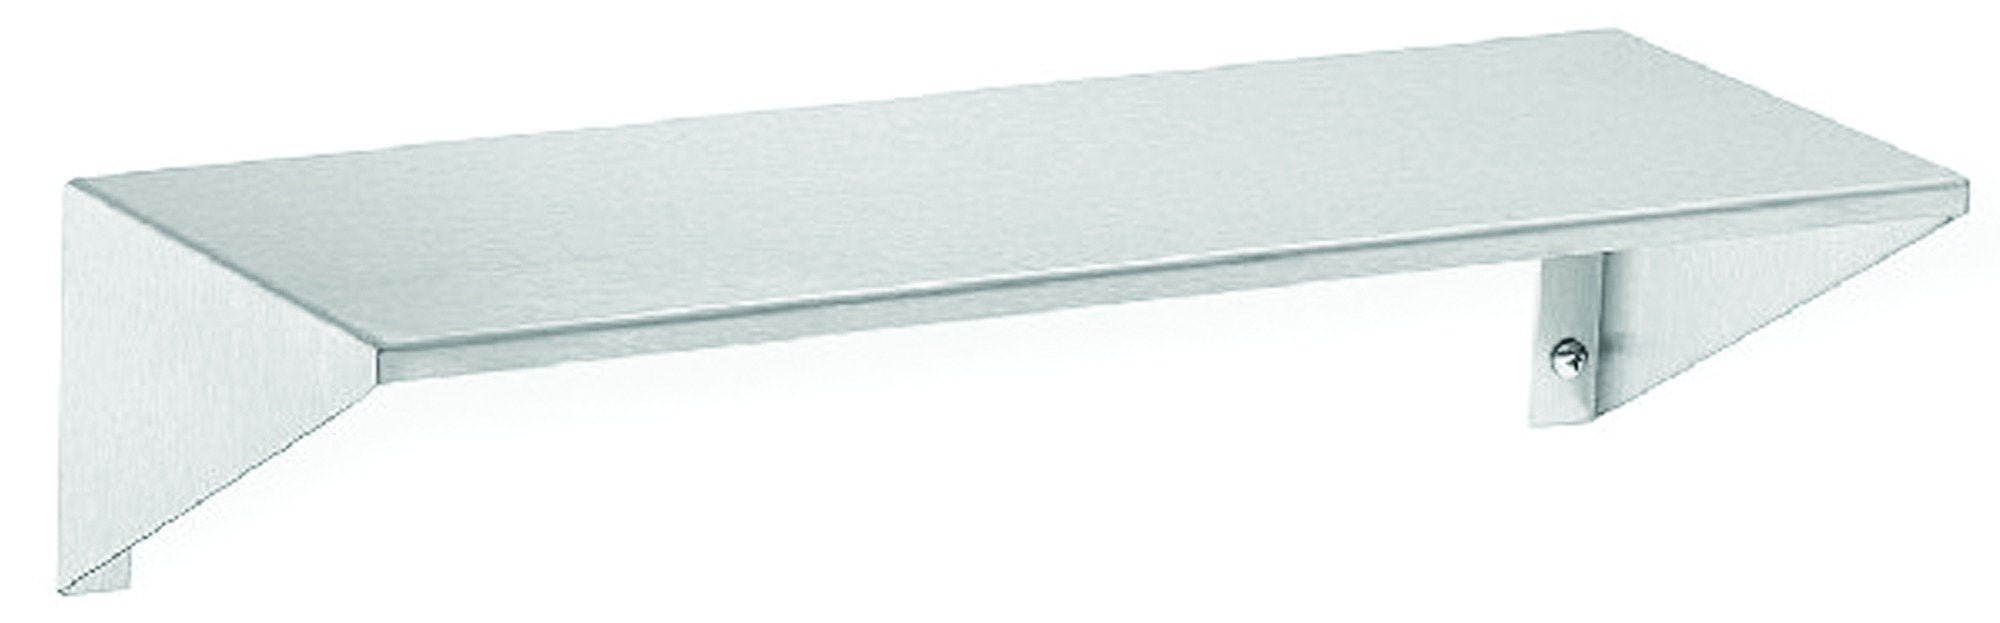 Bradley 758-024000 - Stainless Steel Shelf With Integral End Brackets - 24